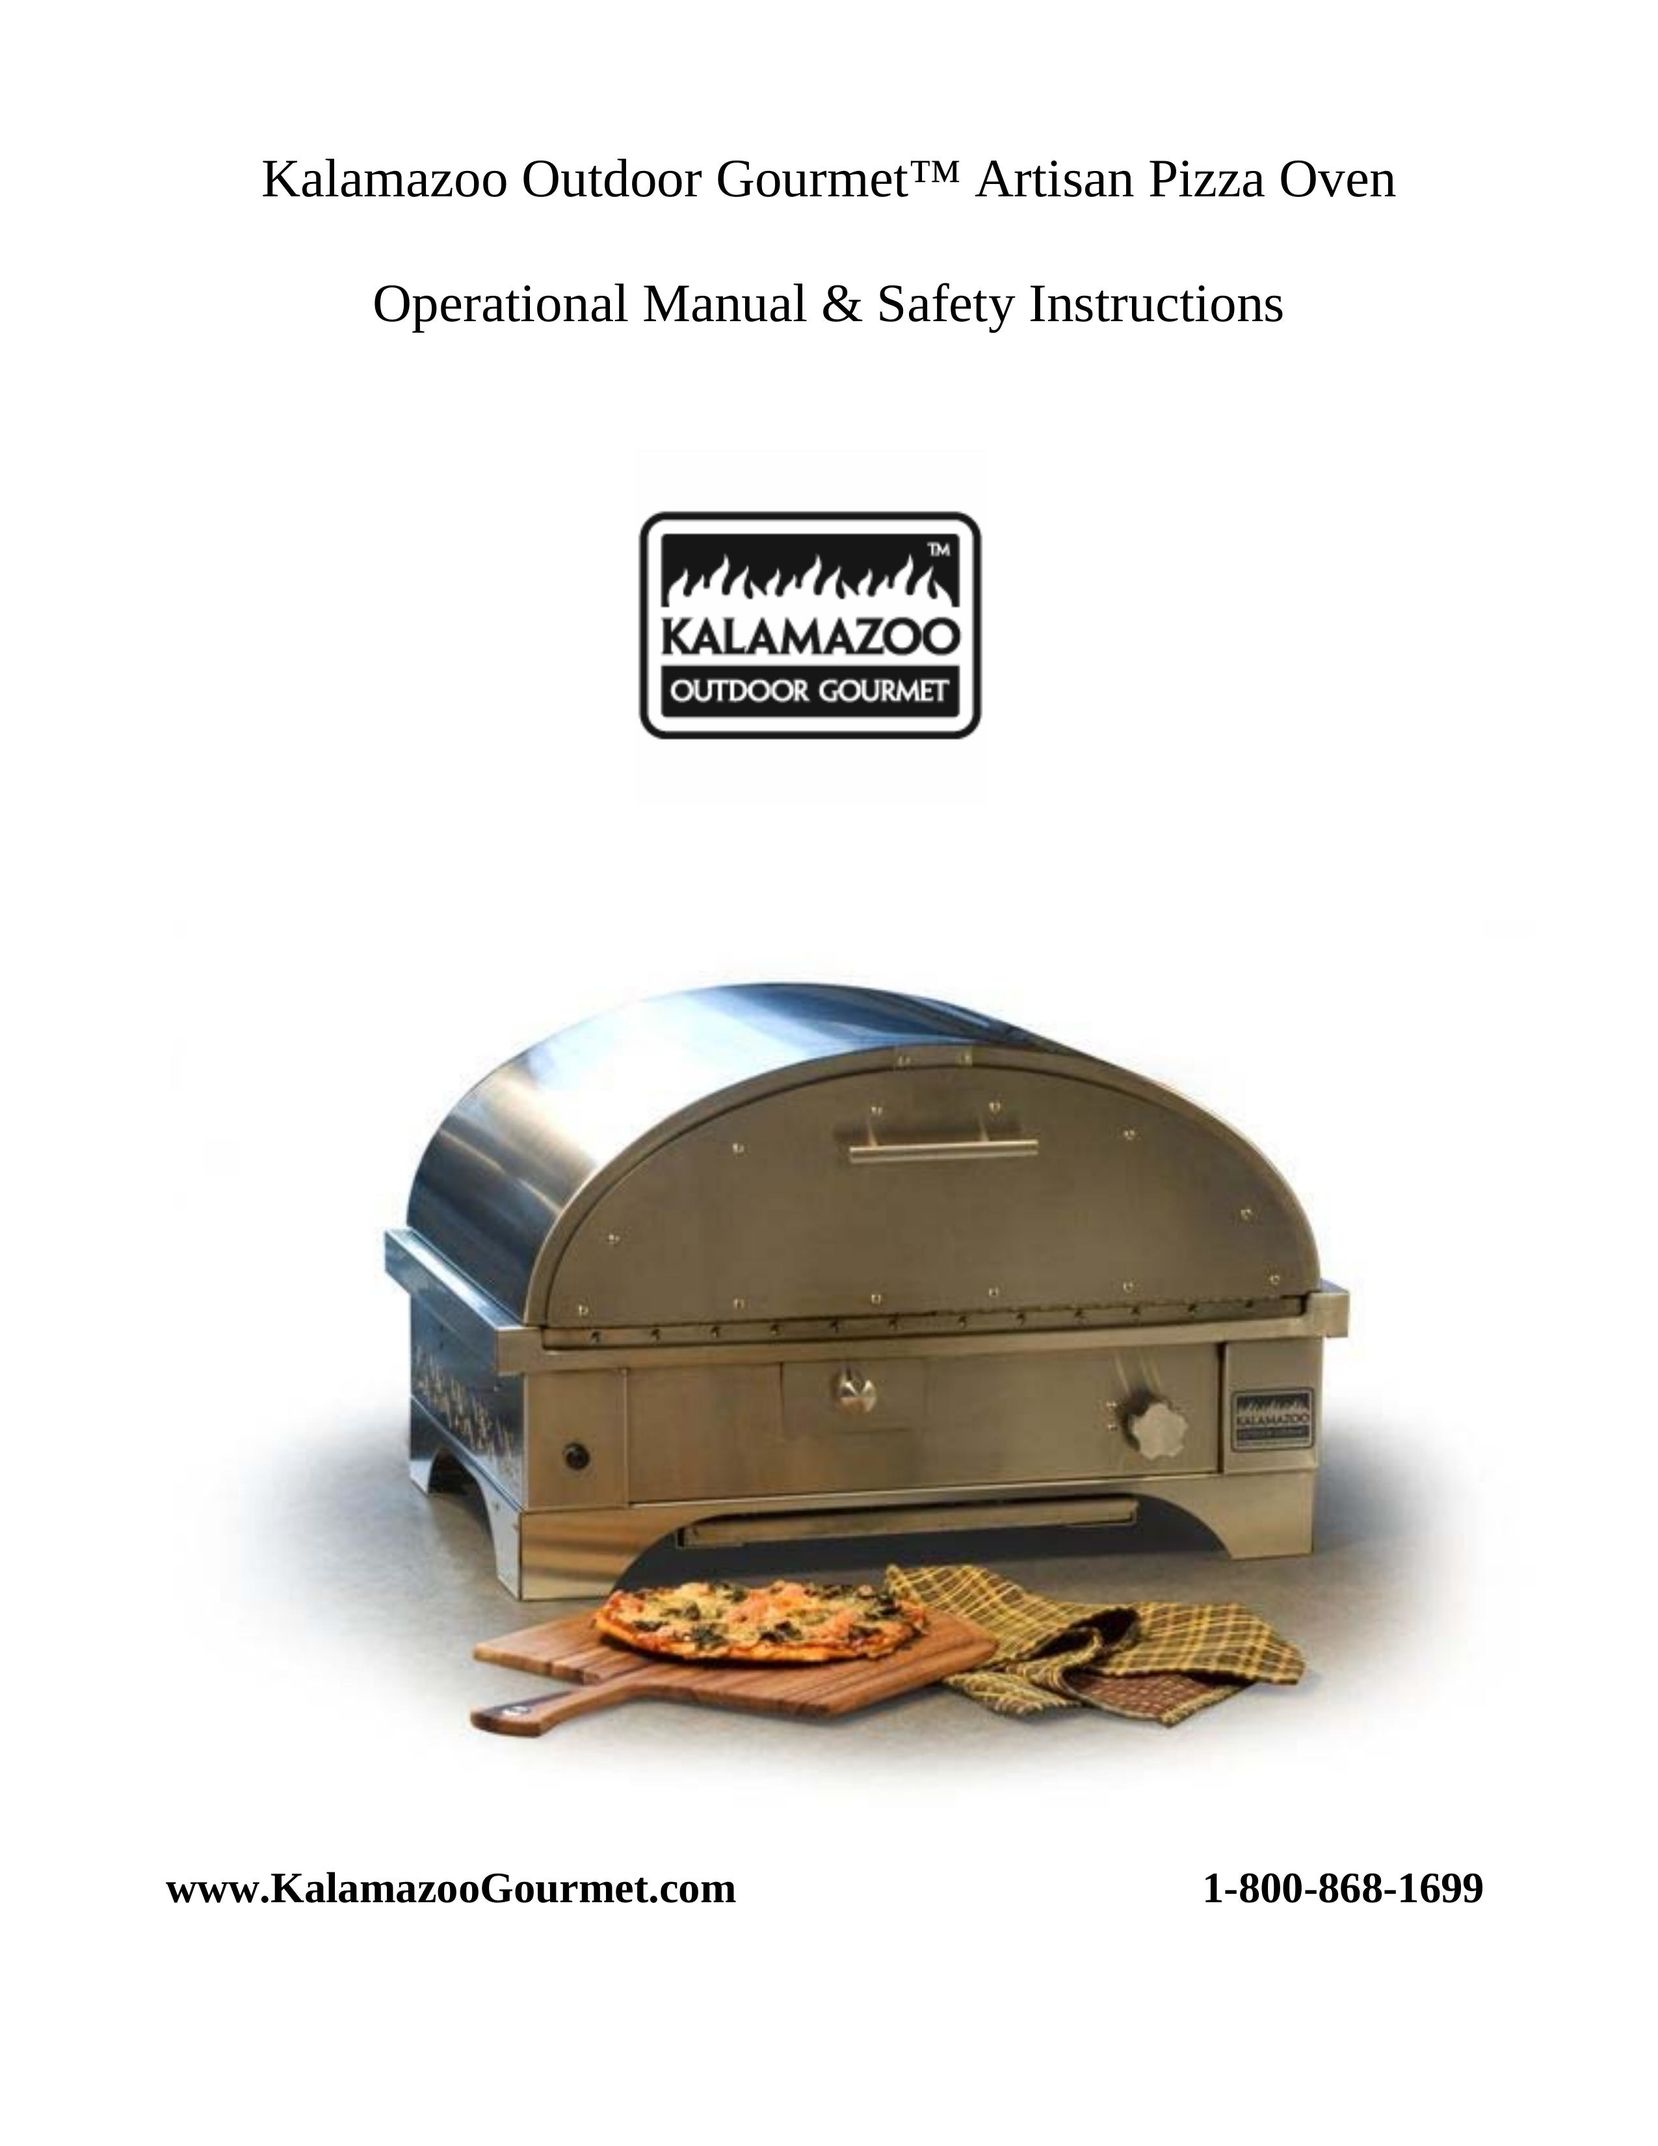 Kalamazoo Outdoor Gourmet Pizza Oven Oven User Manual